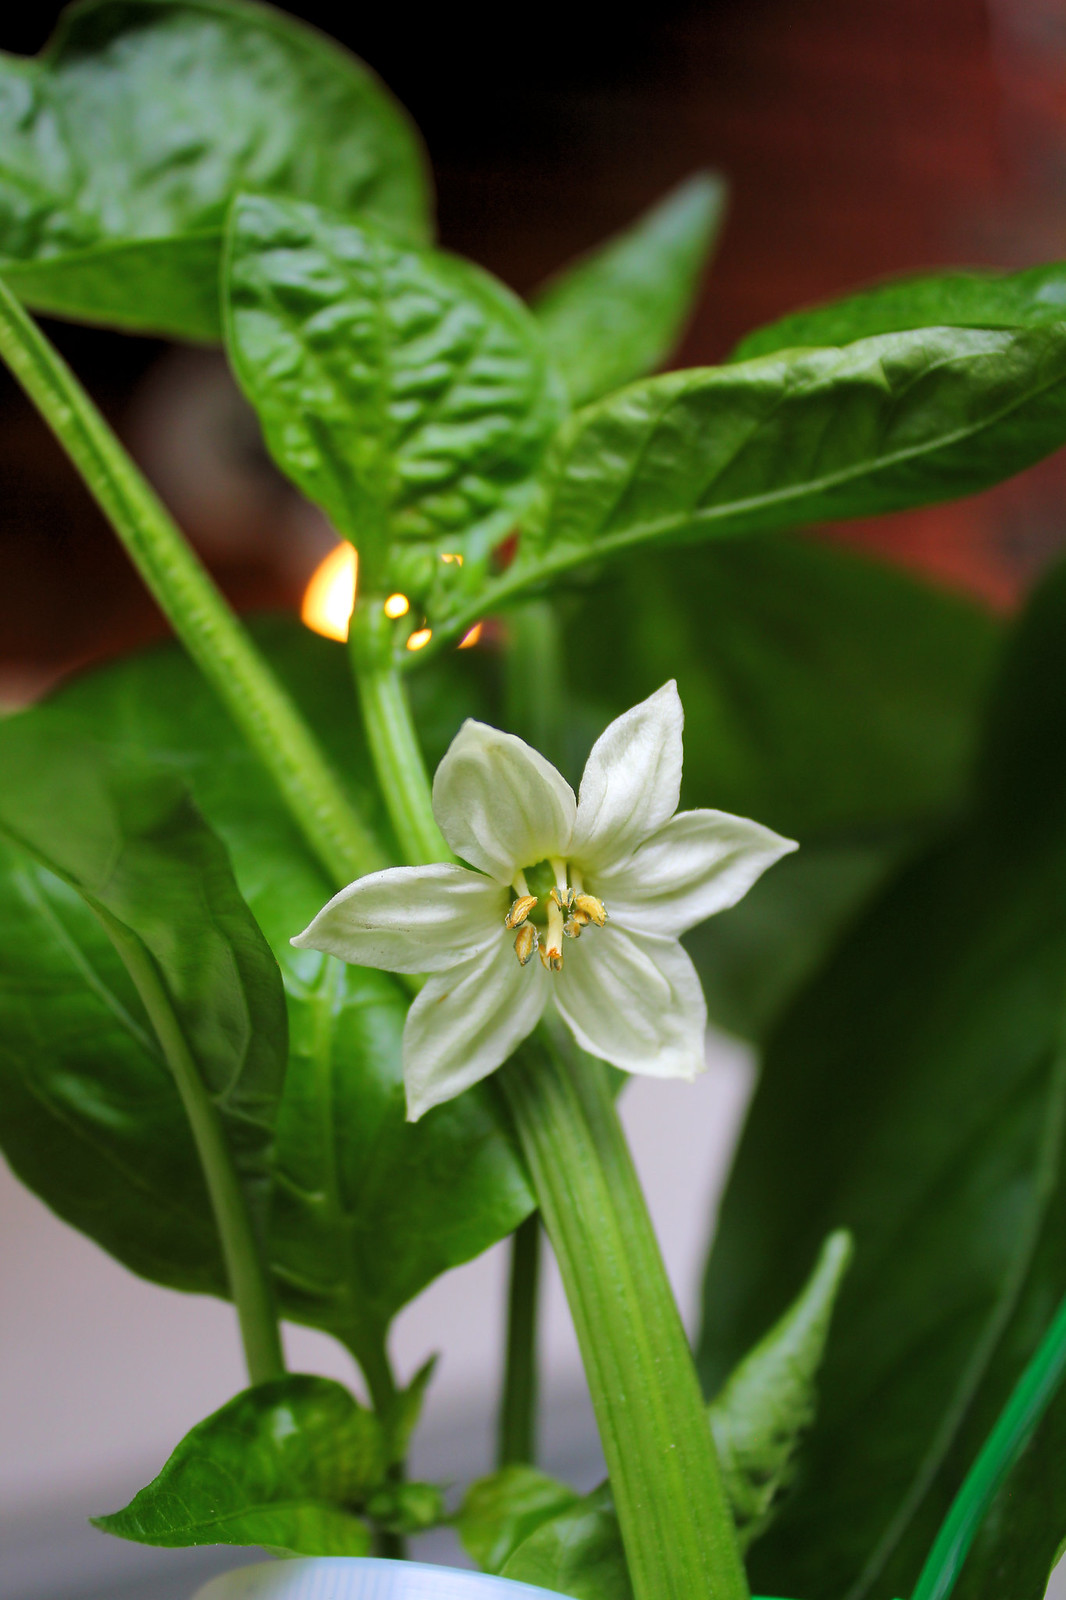 Hydroponic pepper flower